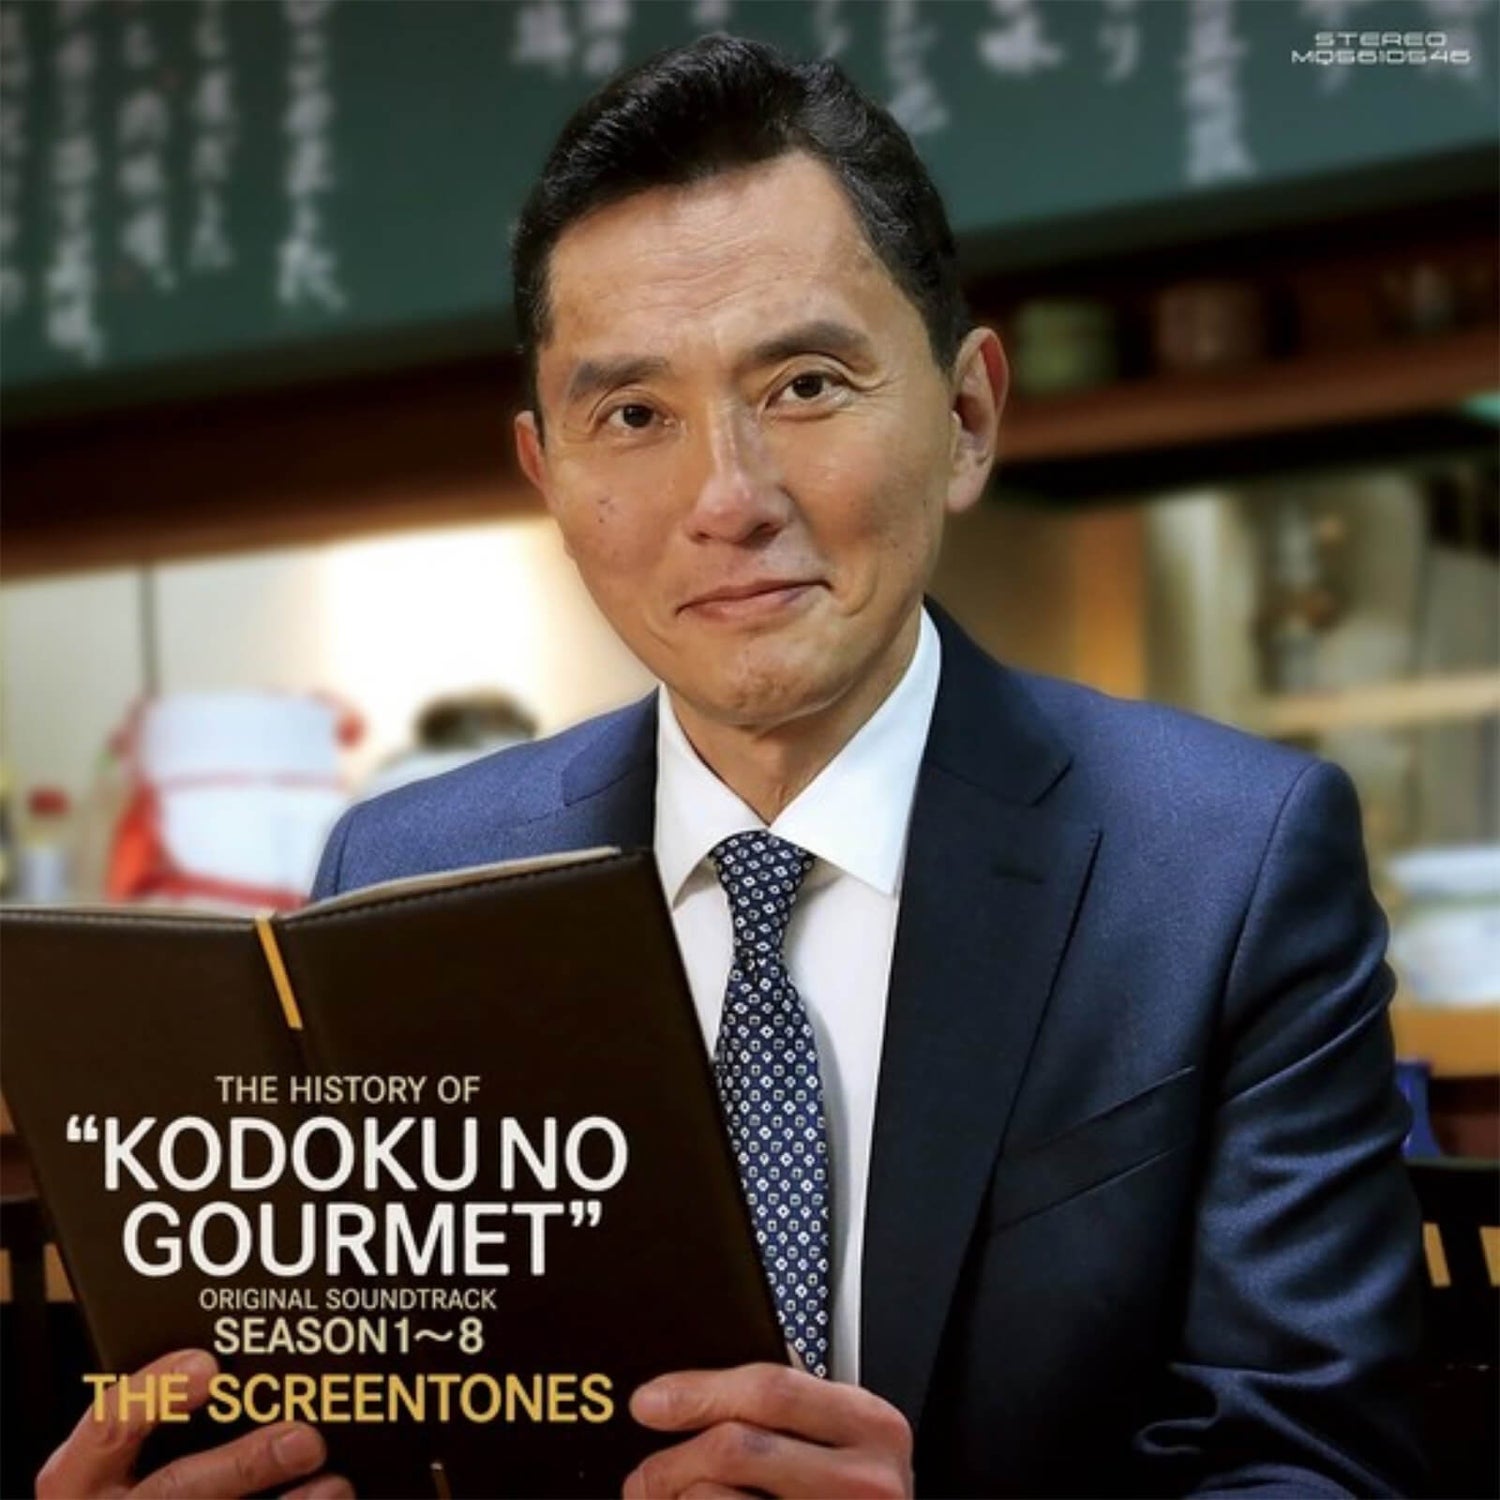 The History Of Kodoku No Gourmet (Original Soundtrack Season 1~8) Vinyl